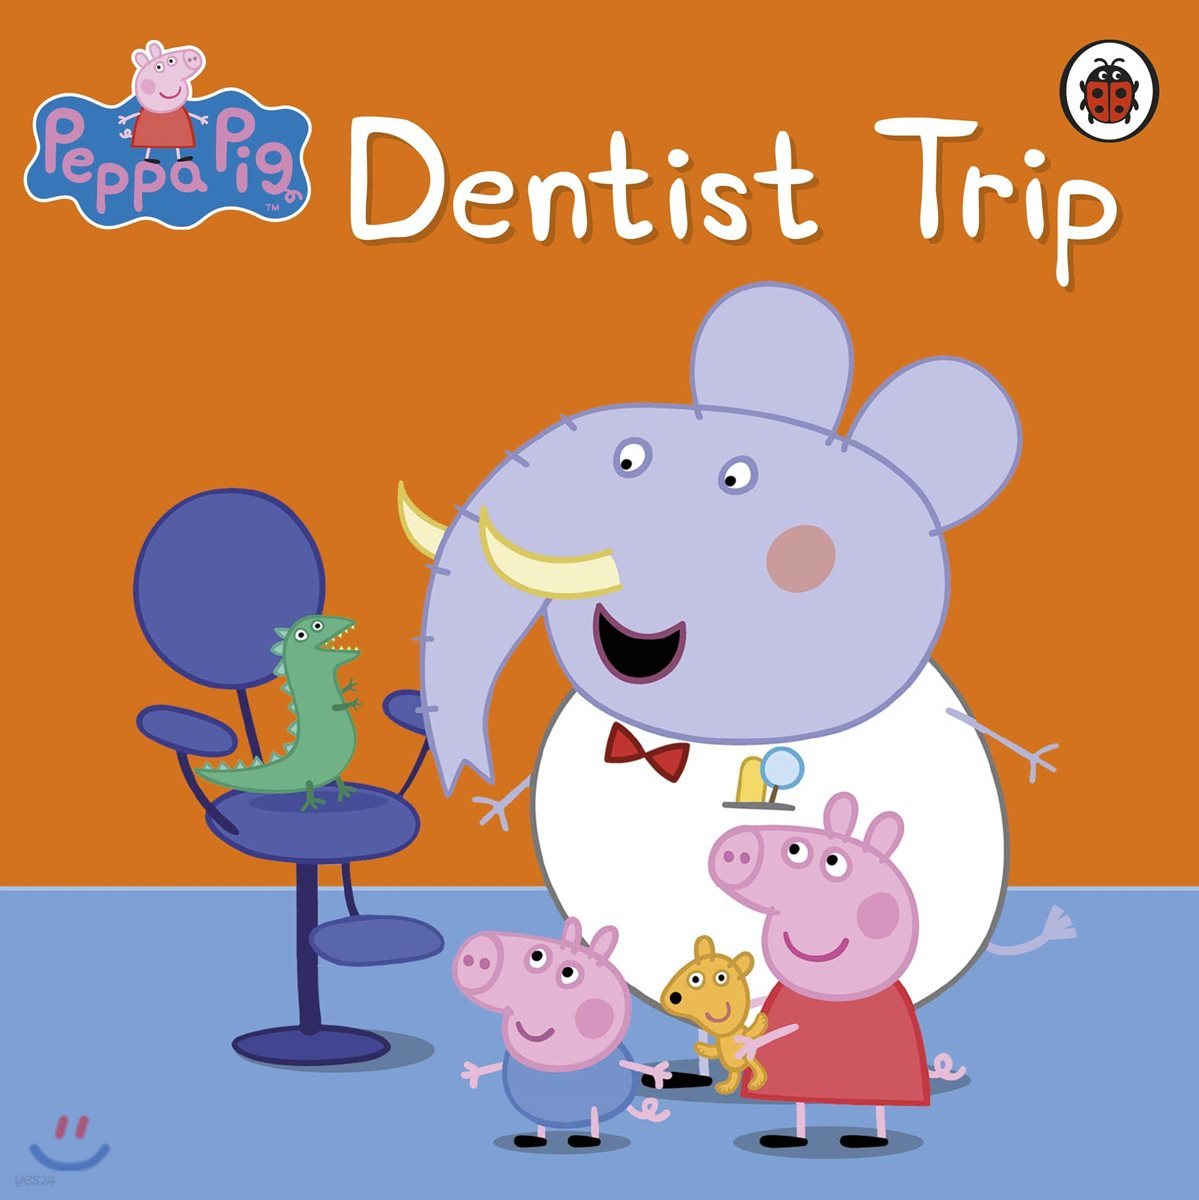 Peppa Pig : Dentist Trip